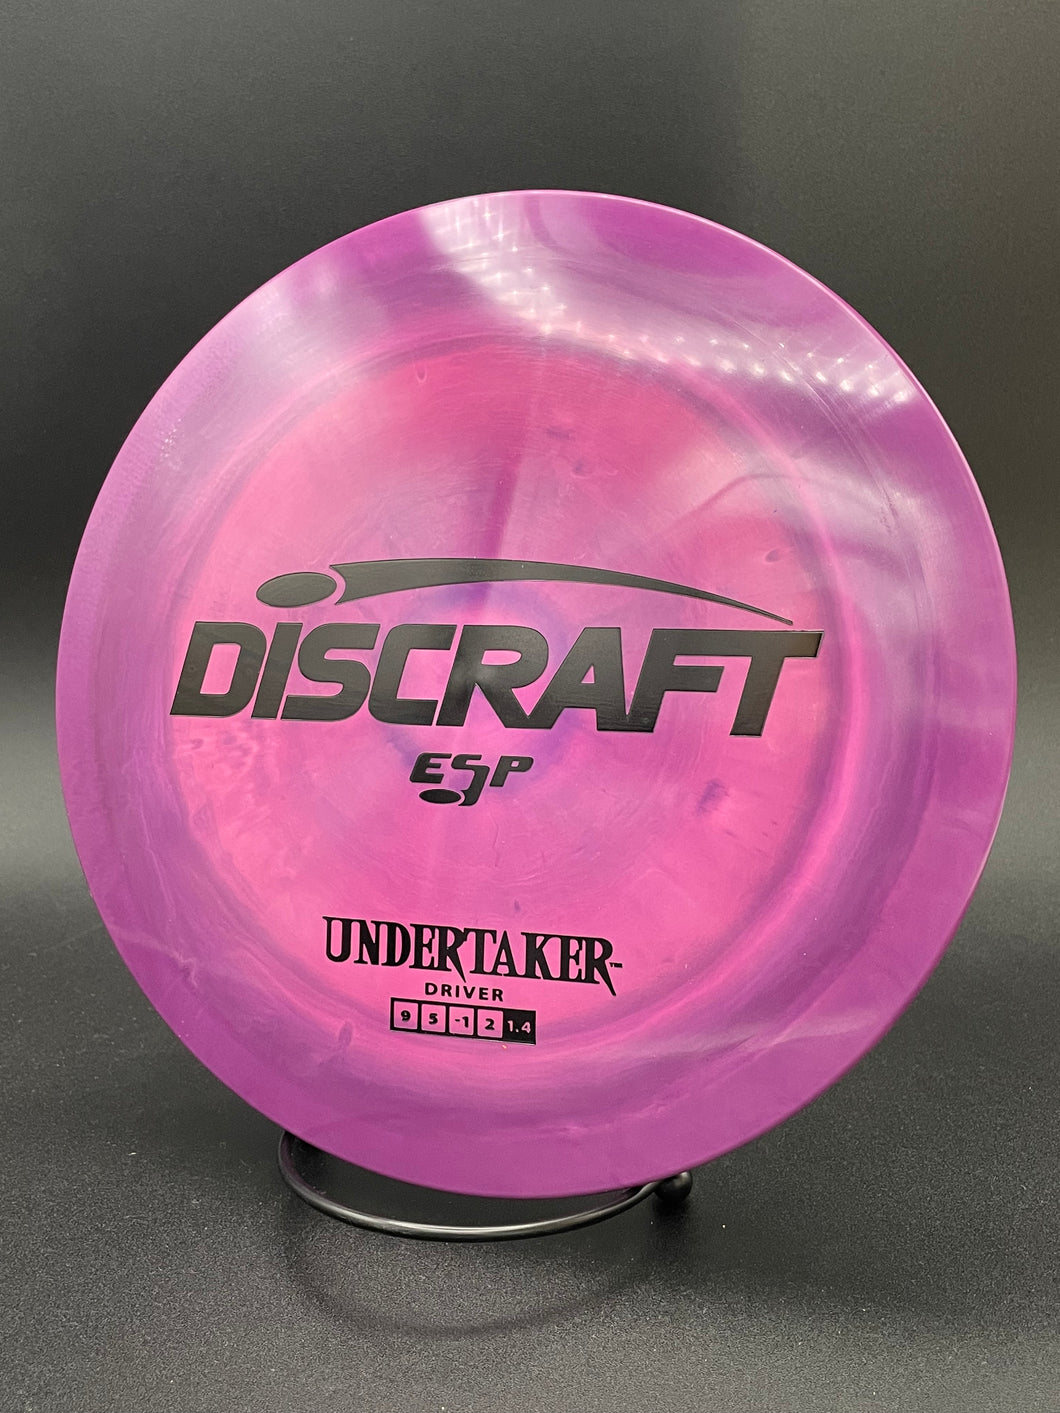 Undertaker / Discraft / ESP